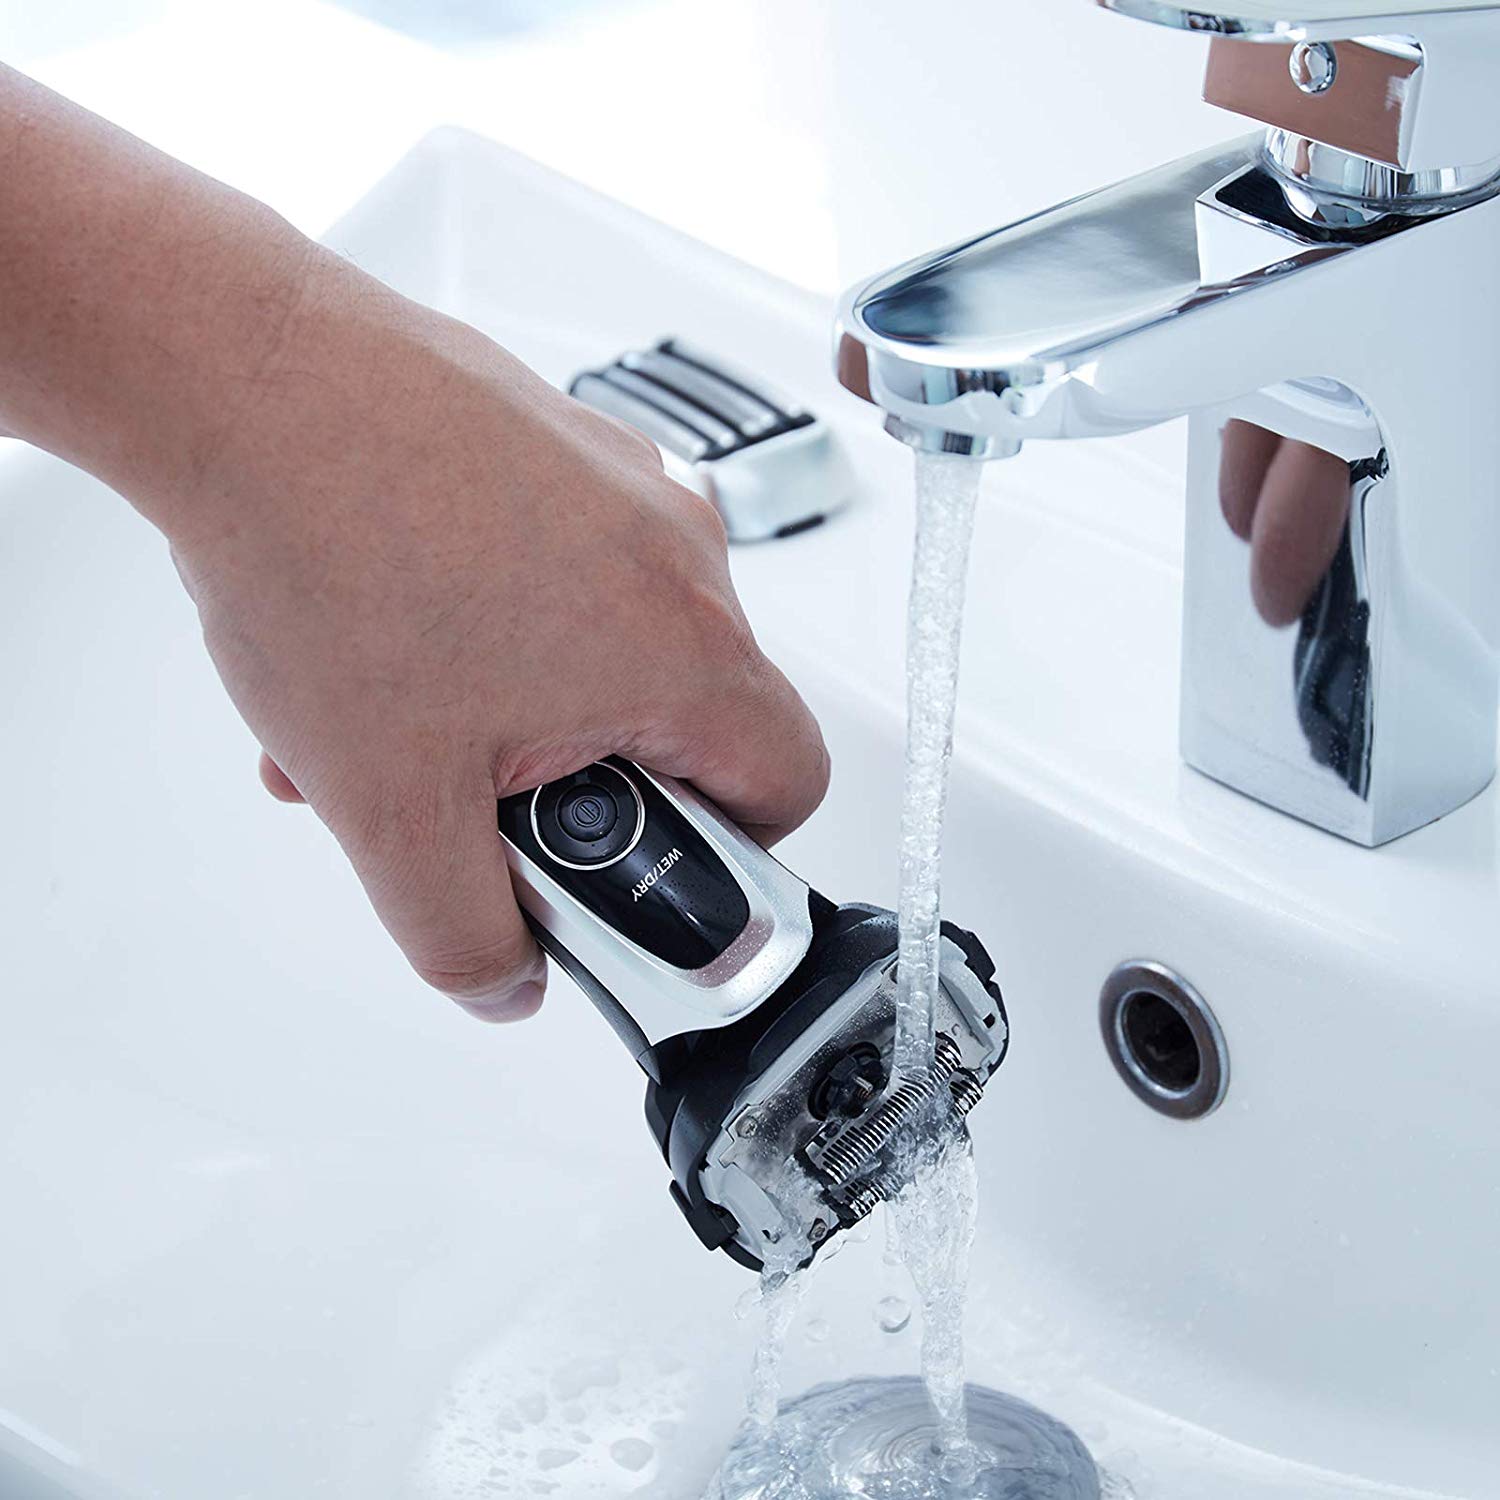 man washing panasonic arc 5 electric shaver in sink